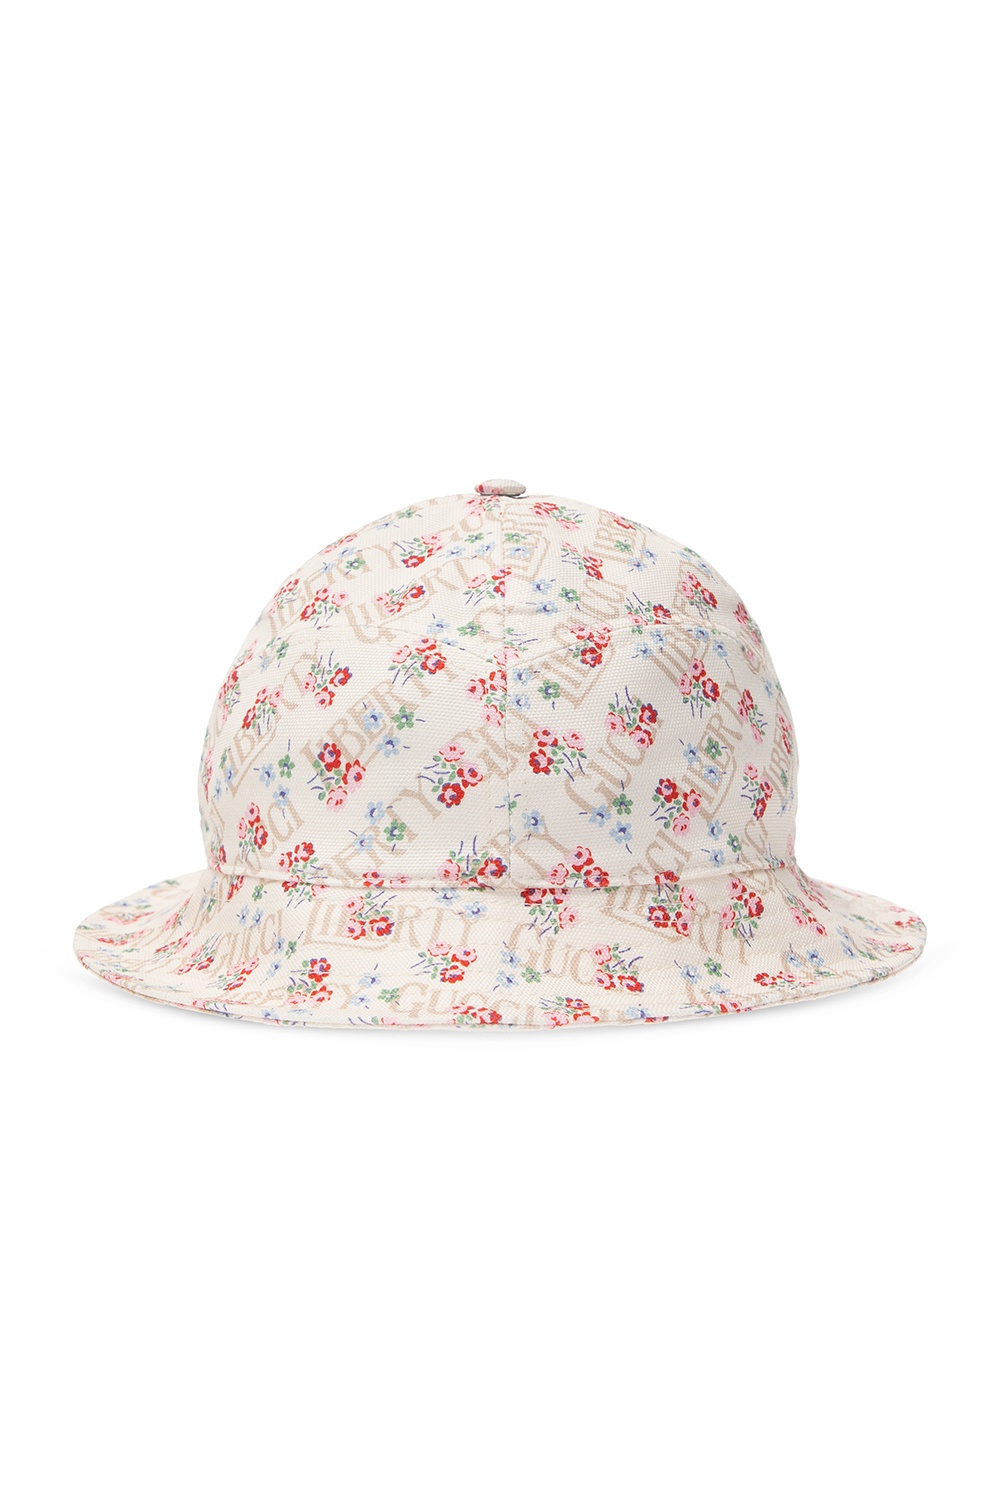 Gucci Floral-printed hat | Men's Accessories | IetpShops